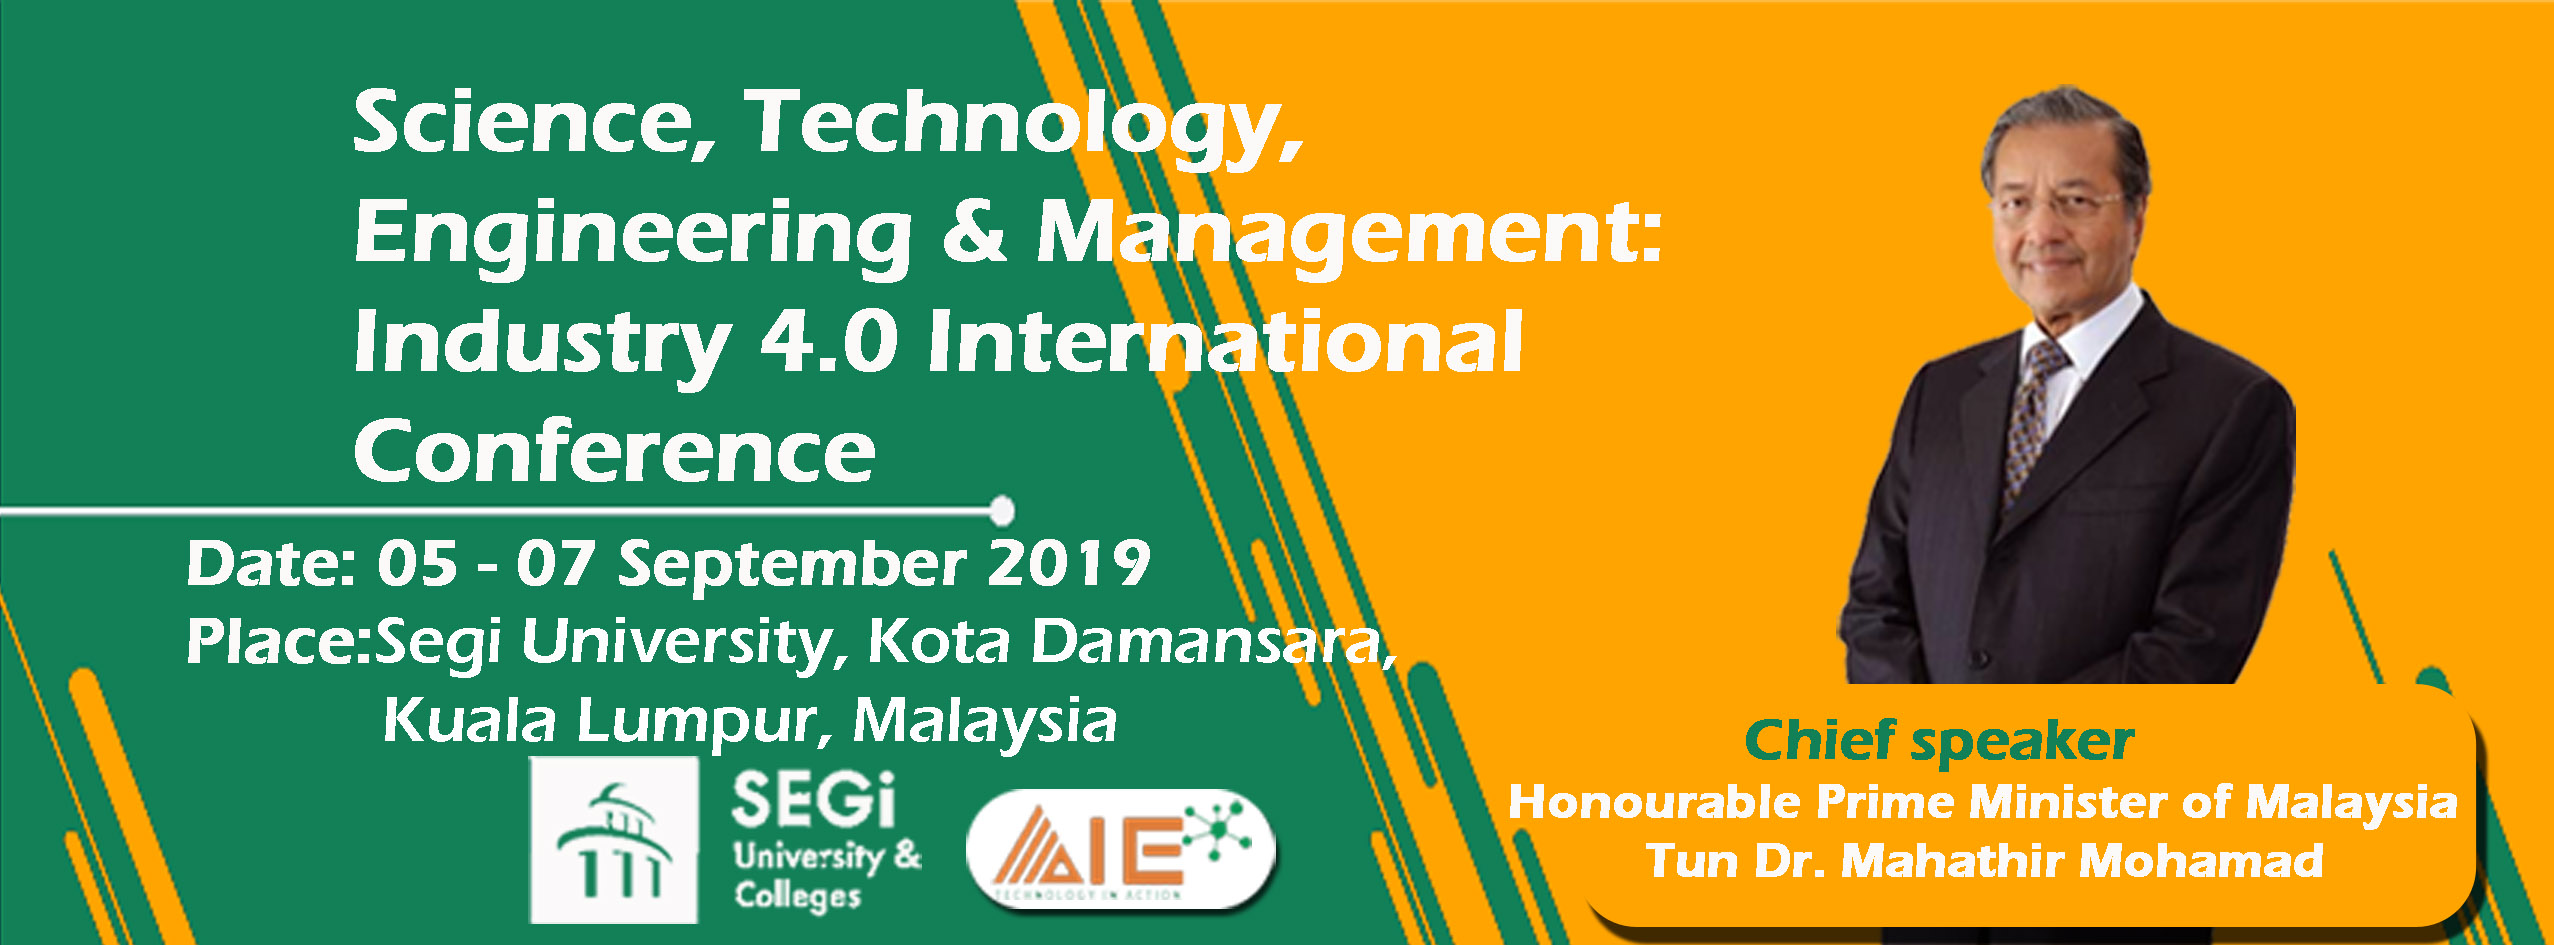 Science, Technology, Engineering and Management: Industry 4.0 International Conference, Kota Damansara, Kuala Lumpur,Kuala Lumpur,Malaysia